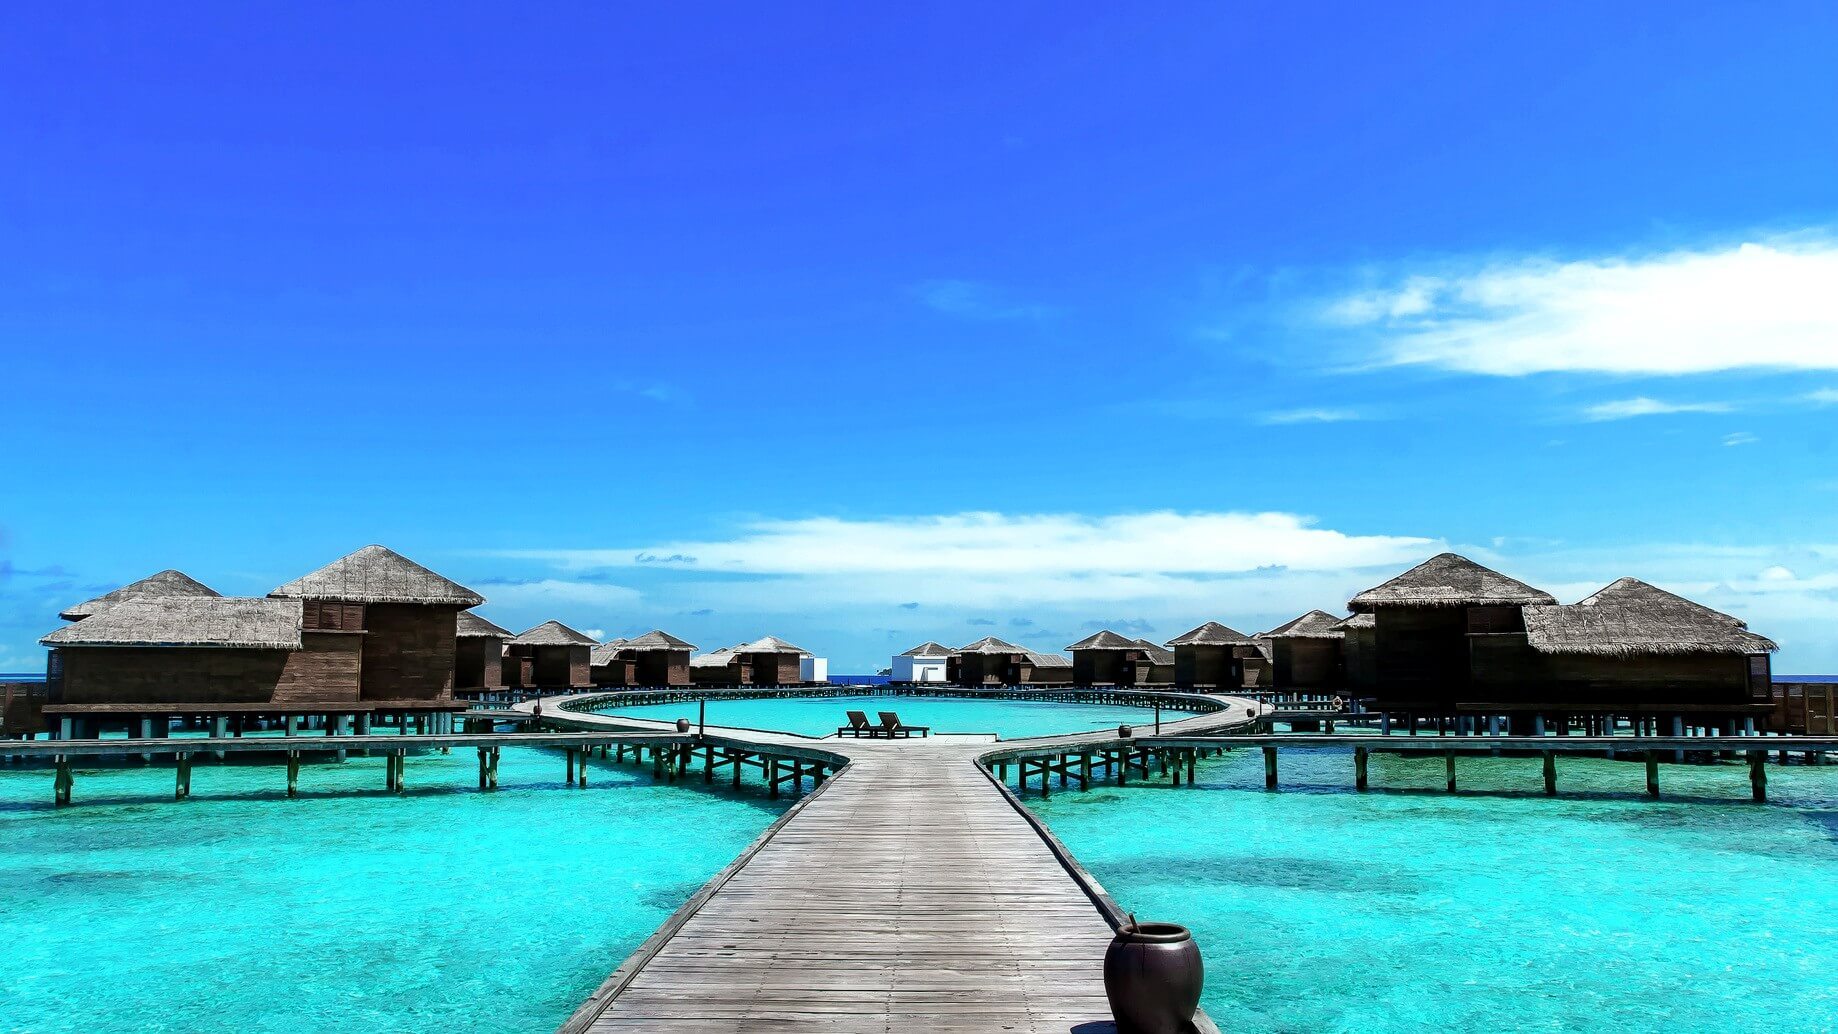 Luxury honeymoon destinations - the Maldives - AssistAnt Luxury Travel